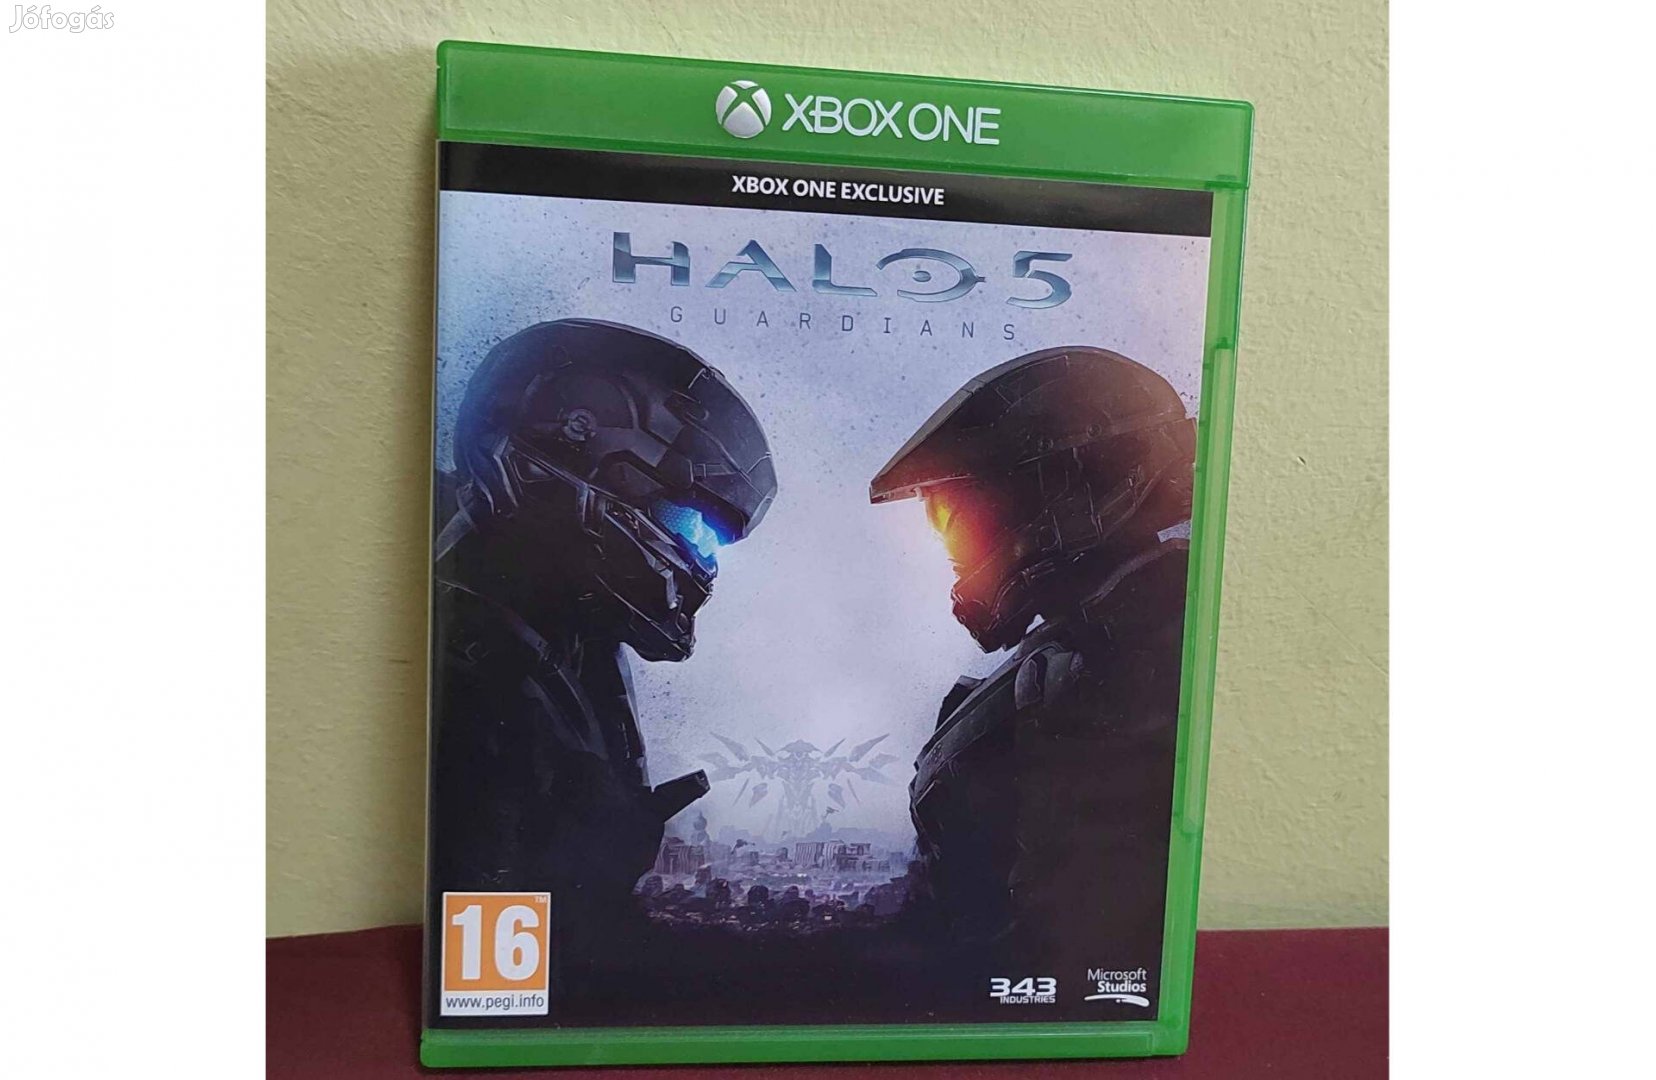 Halo 5 Gurdians - Xbox One